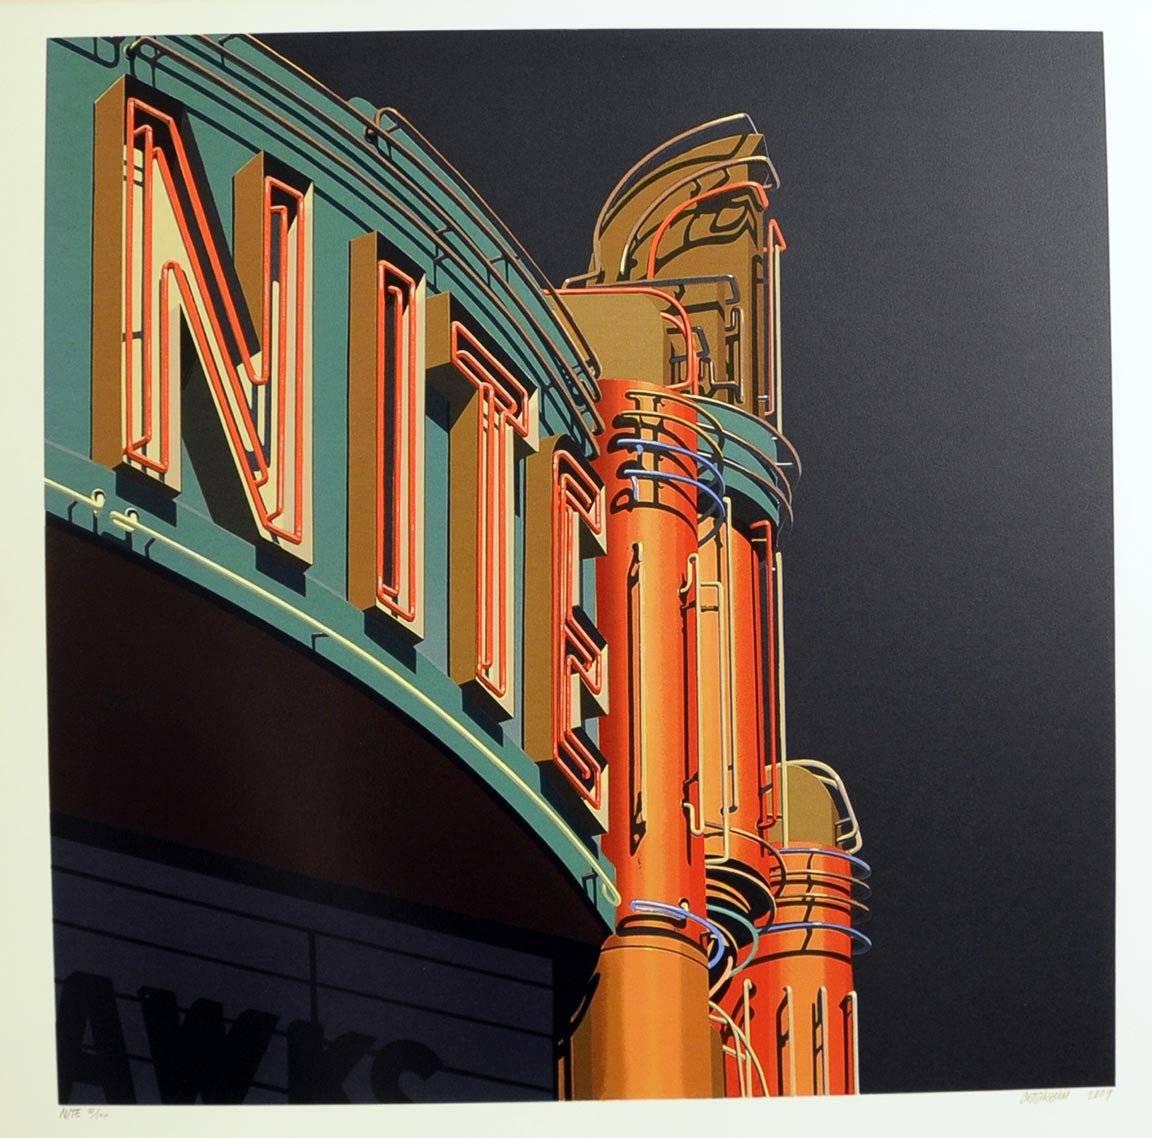 Nite, from American Signs portfolio - Print by Robert Cottingham